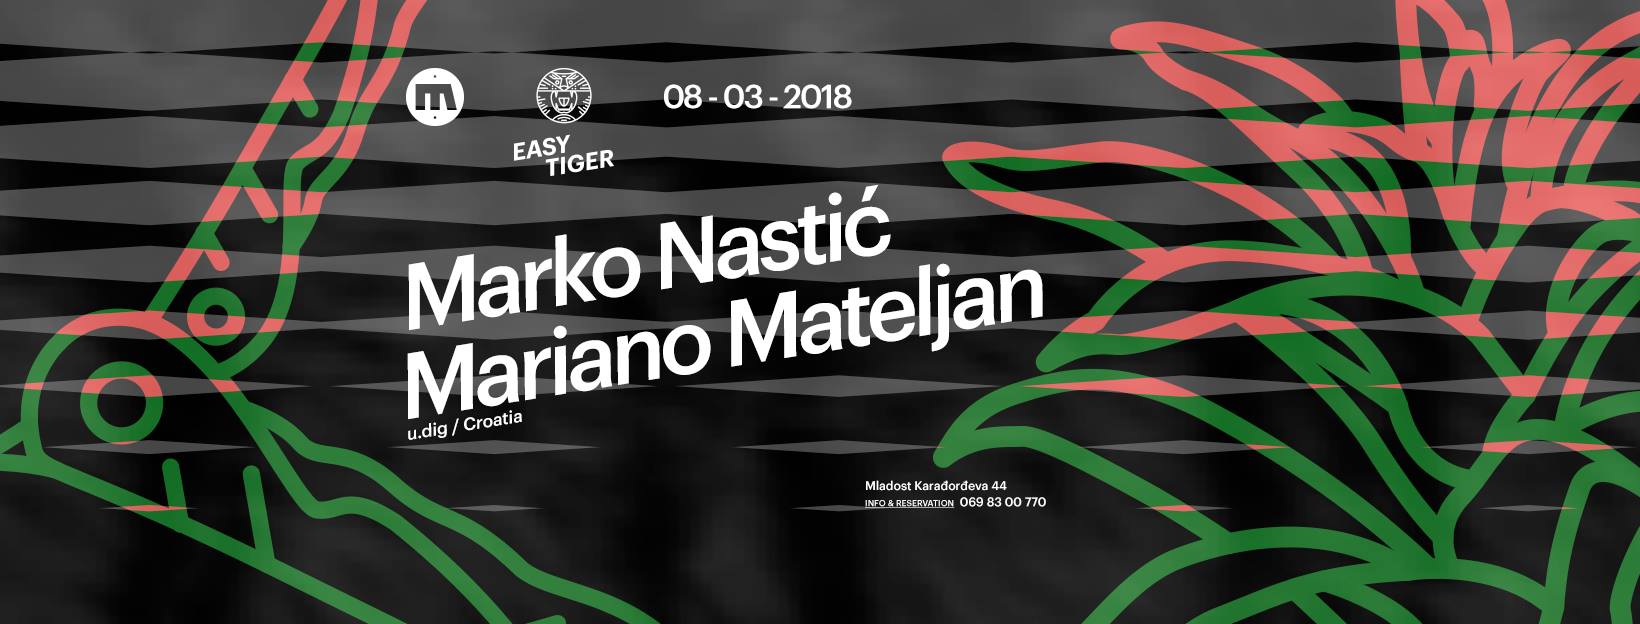 Easy Tiger // Marko Nastić & Mariano Mateljan 08.03.2018.Mladost